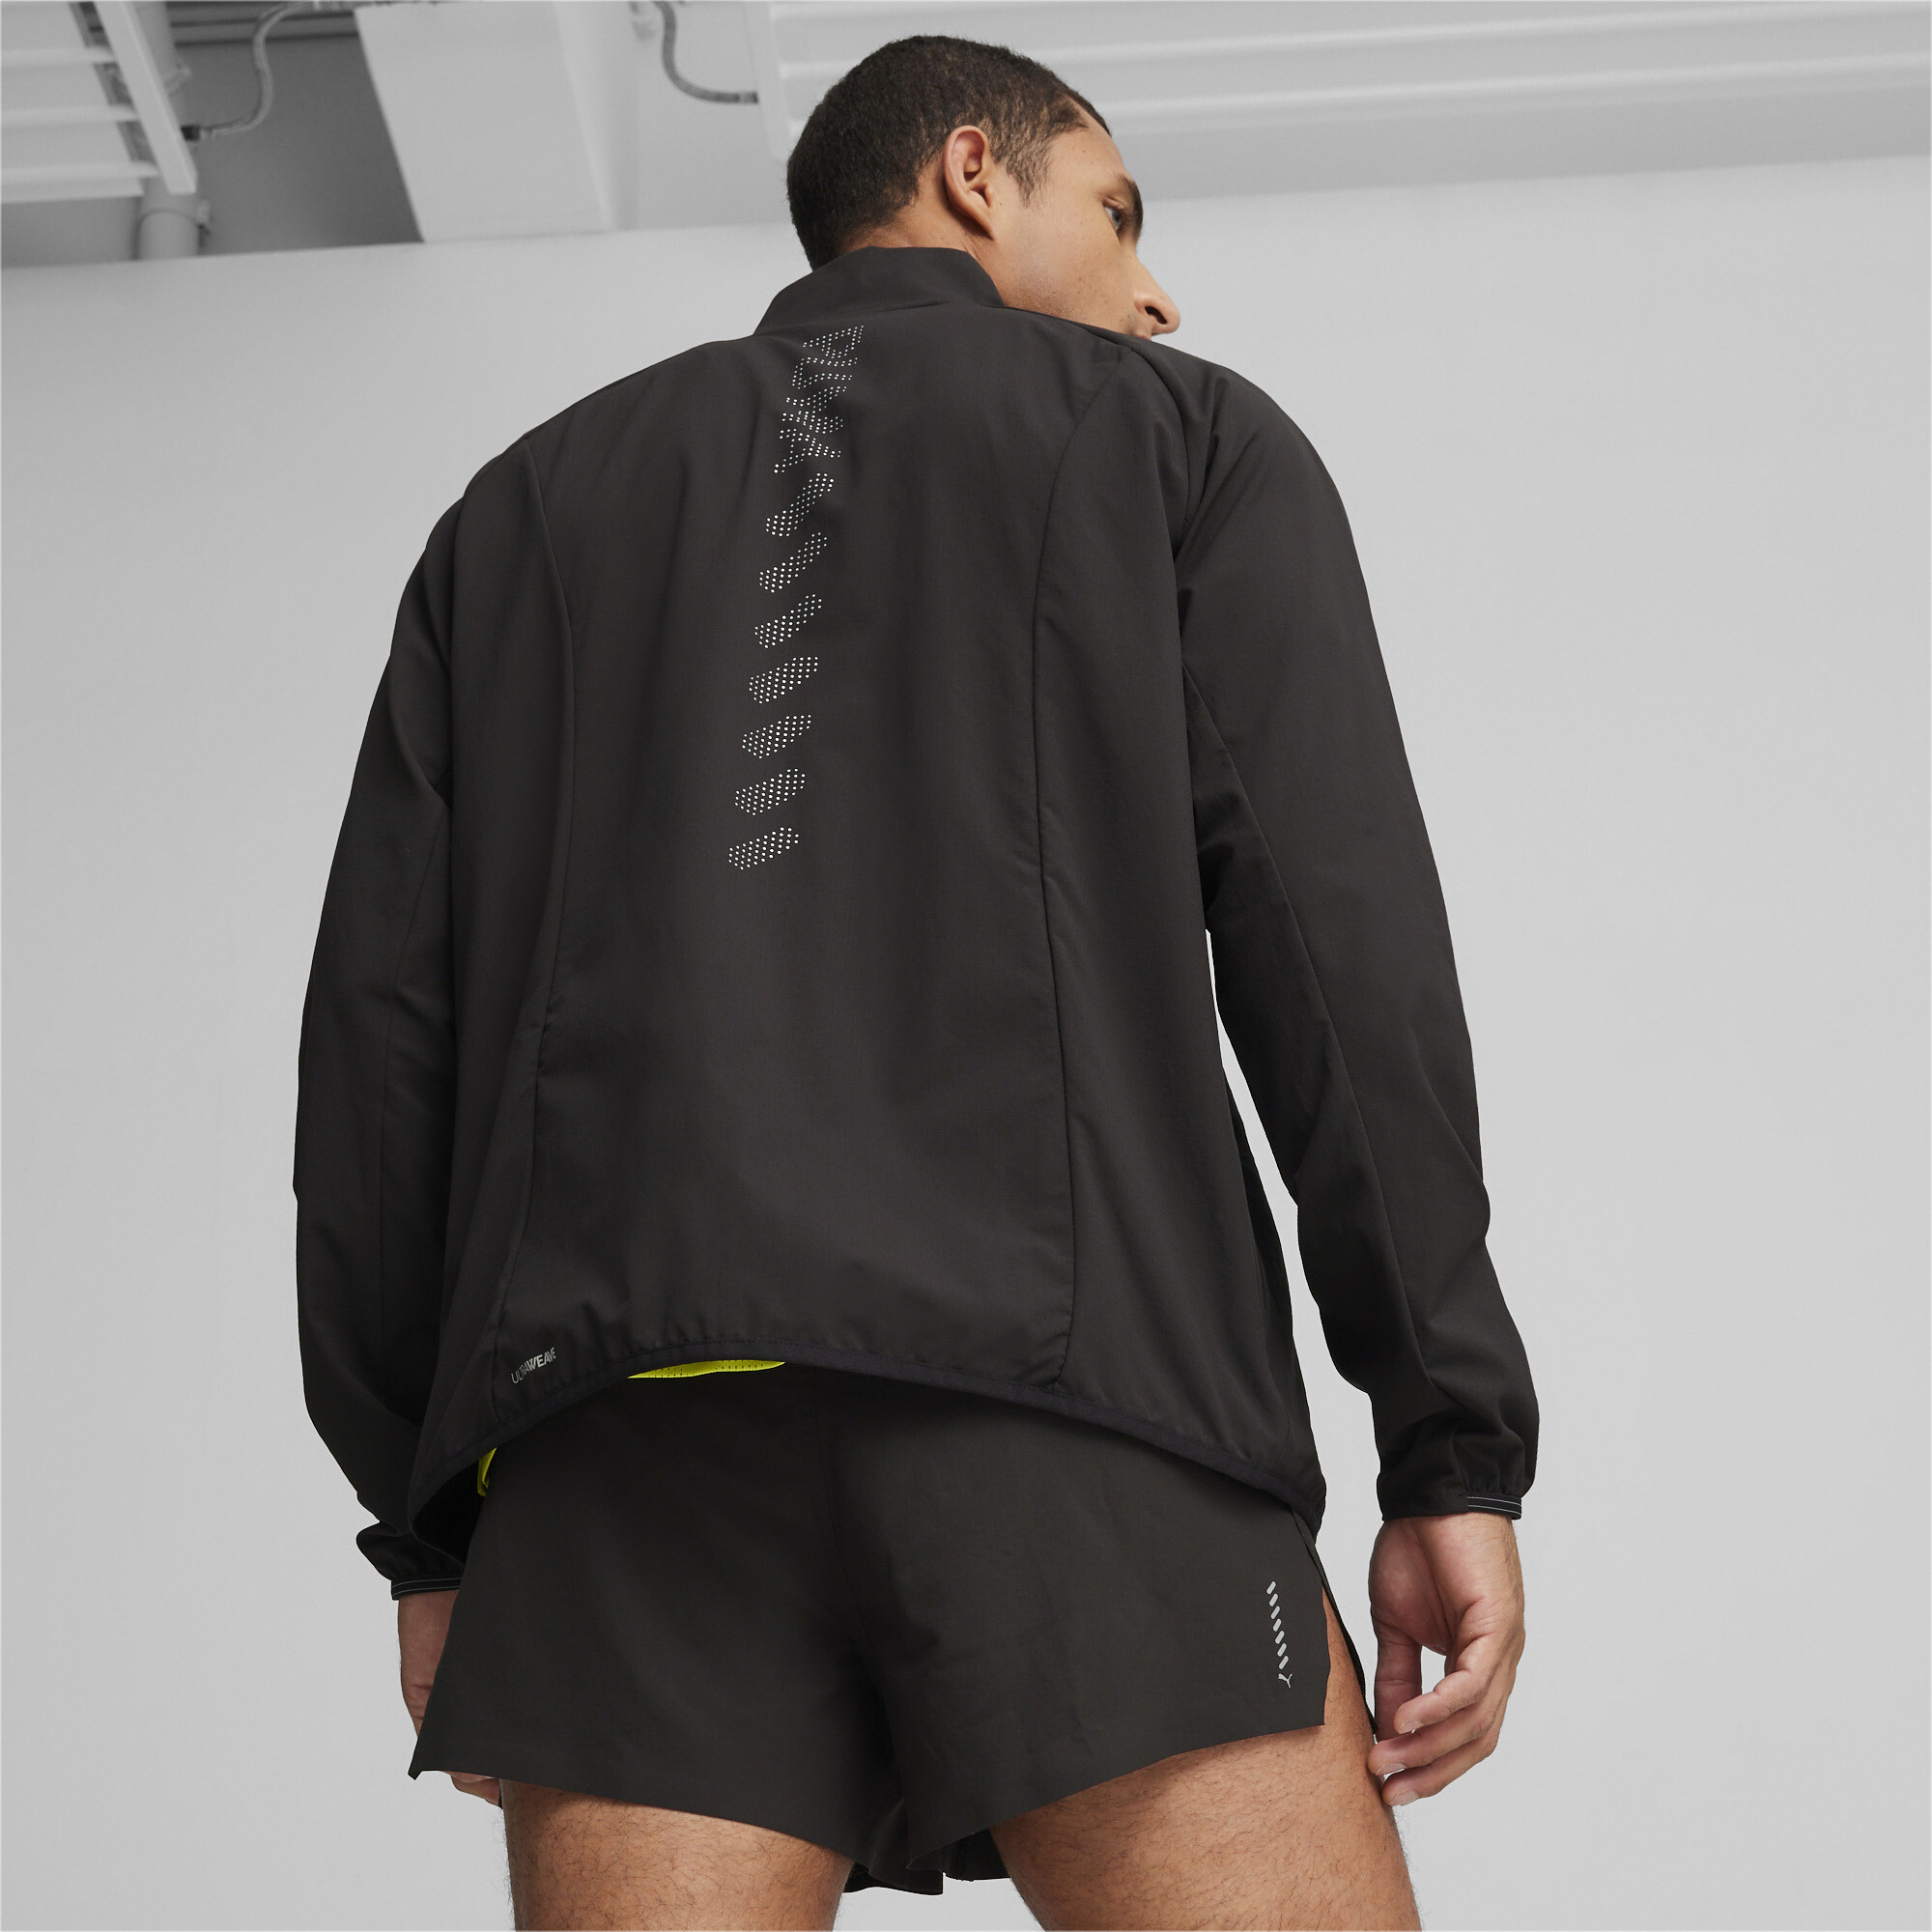 Men's PUMA RUN Elite Jacket In Black, Size XL